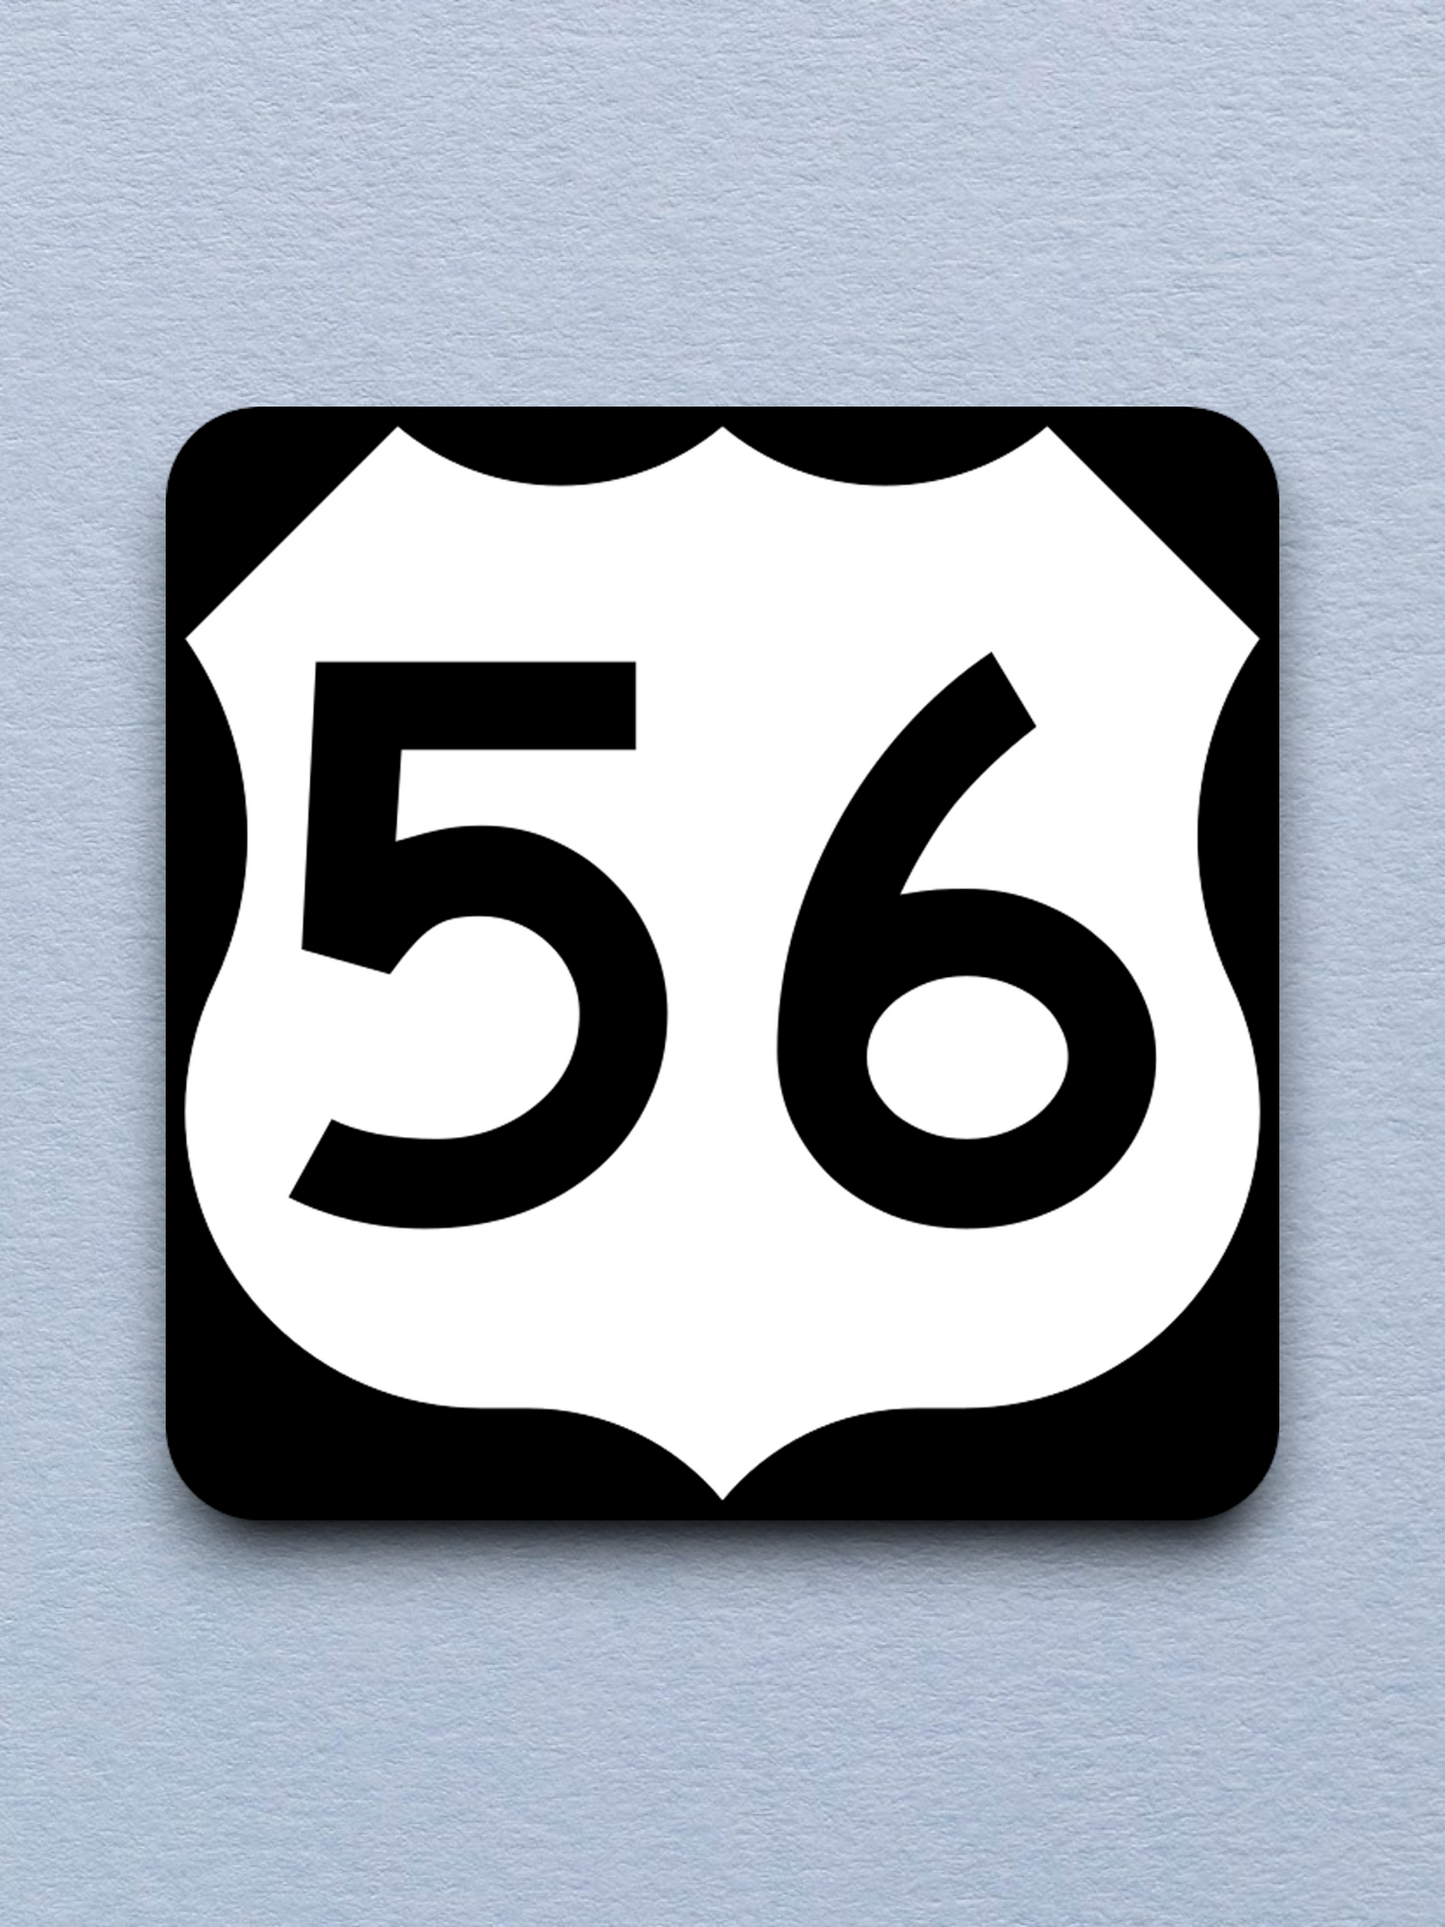 U.S. Route 56 Road Sign Sticker